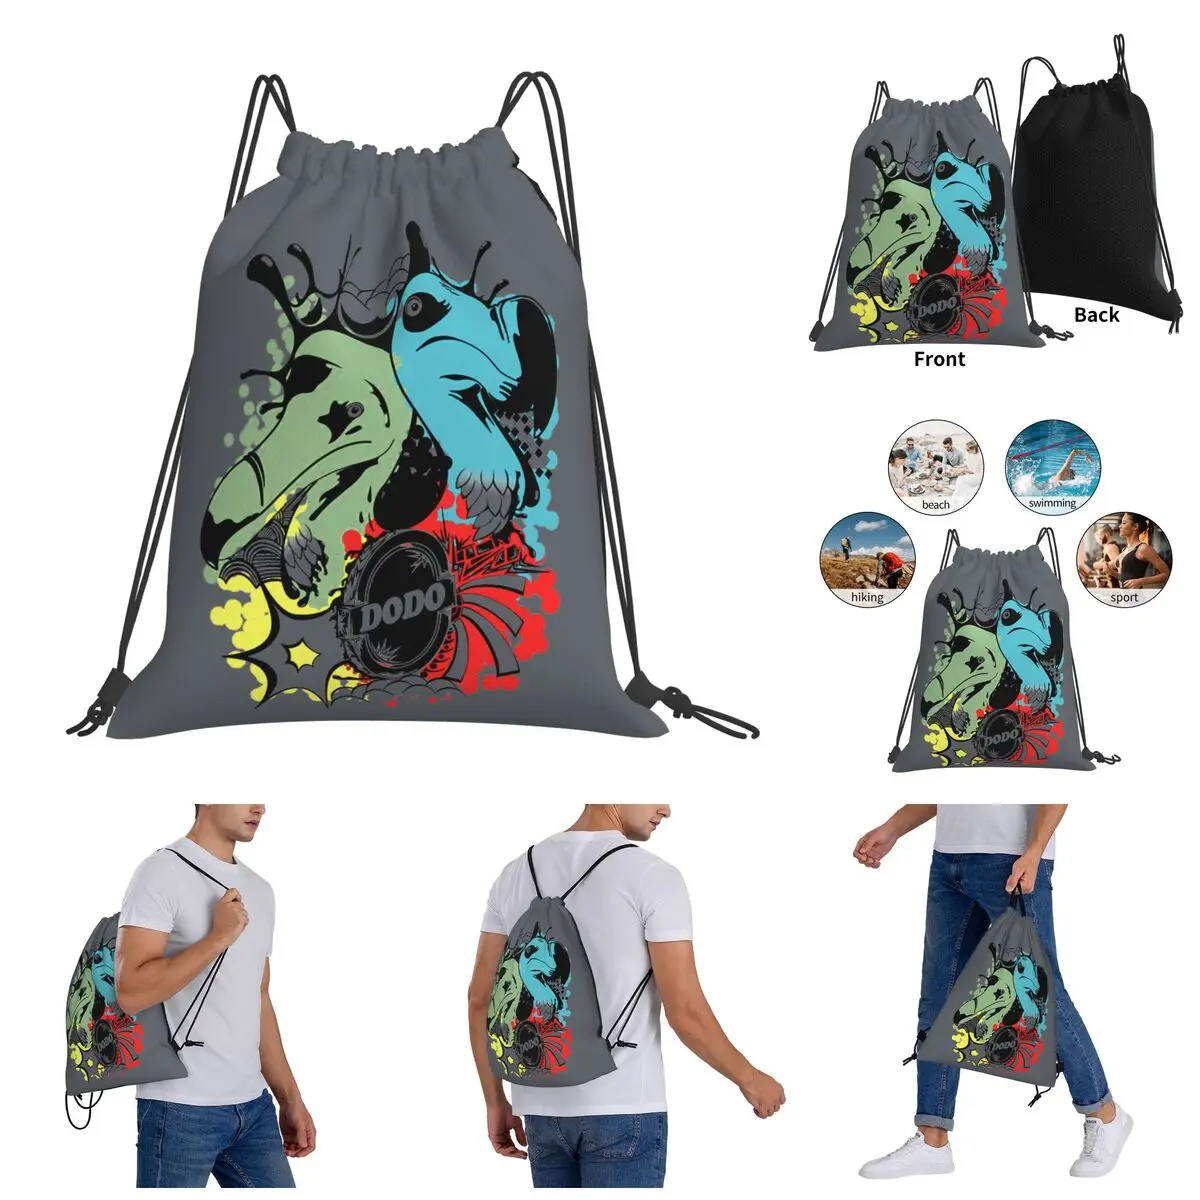 

Backpack Funny Novelty Drawstring Bags Gym Bag Badass Dodos Hot Sale Blanket roll